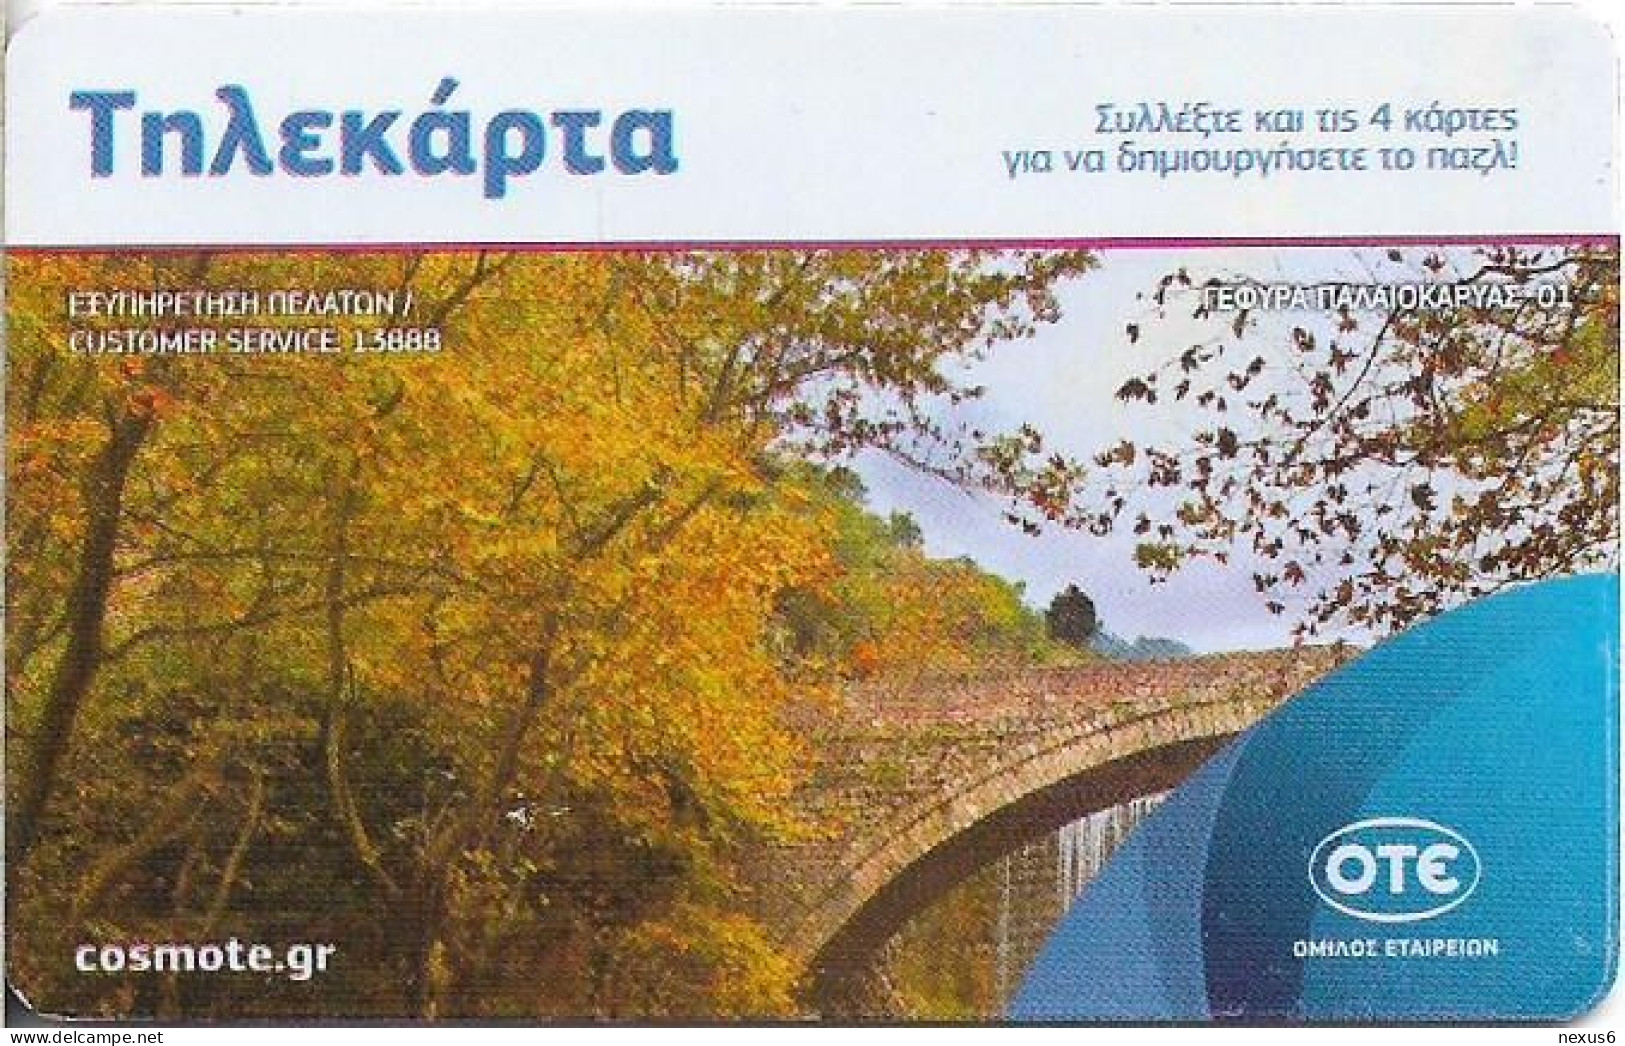 Greece - X2454B - Paleokarya Bridge Puzzle 1/4, Cn. 0509, 09.2019, 29.000ex, Used - Grecia